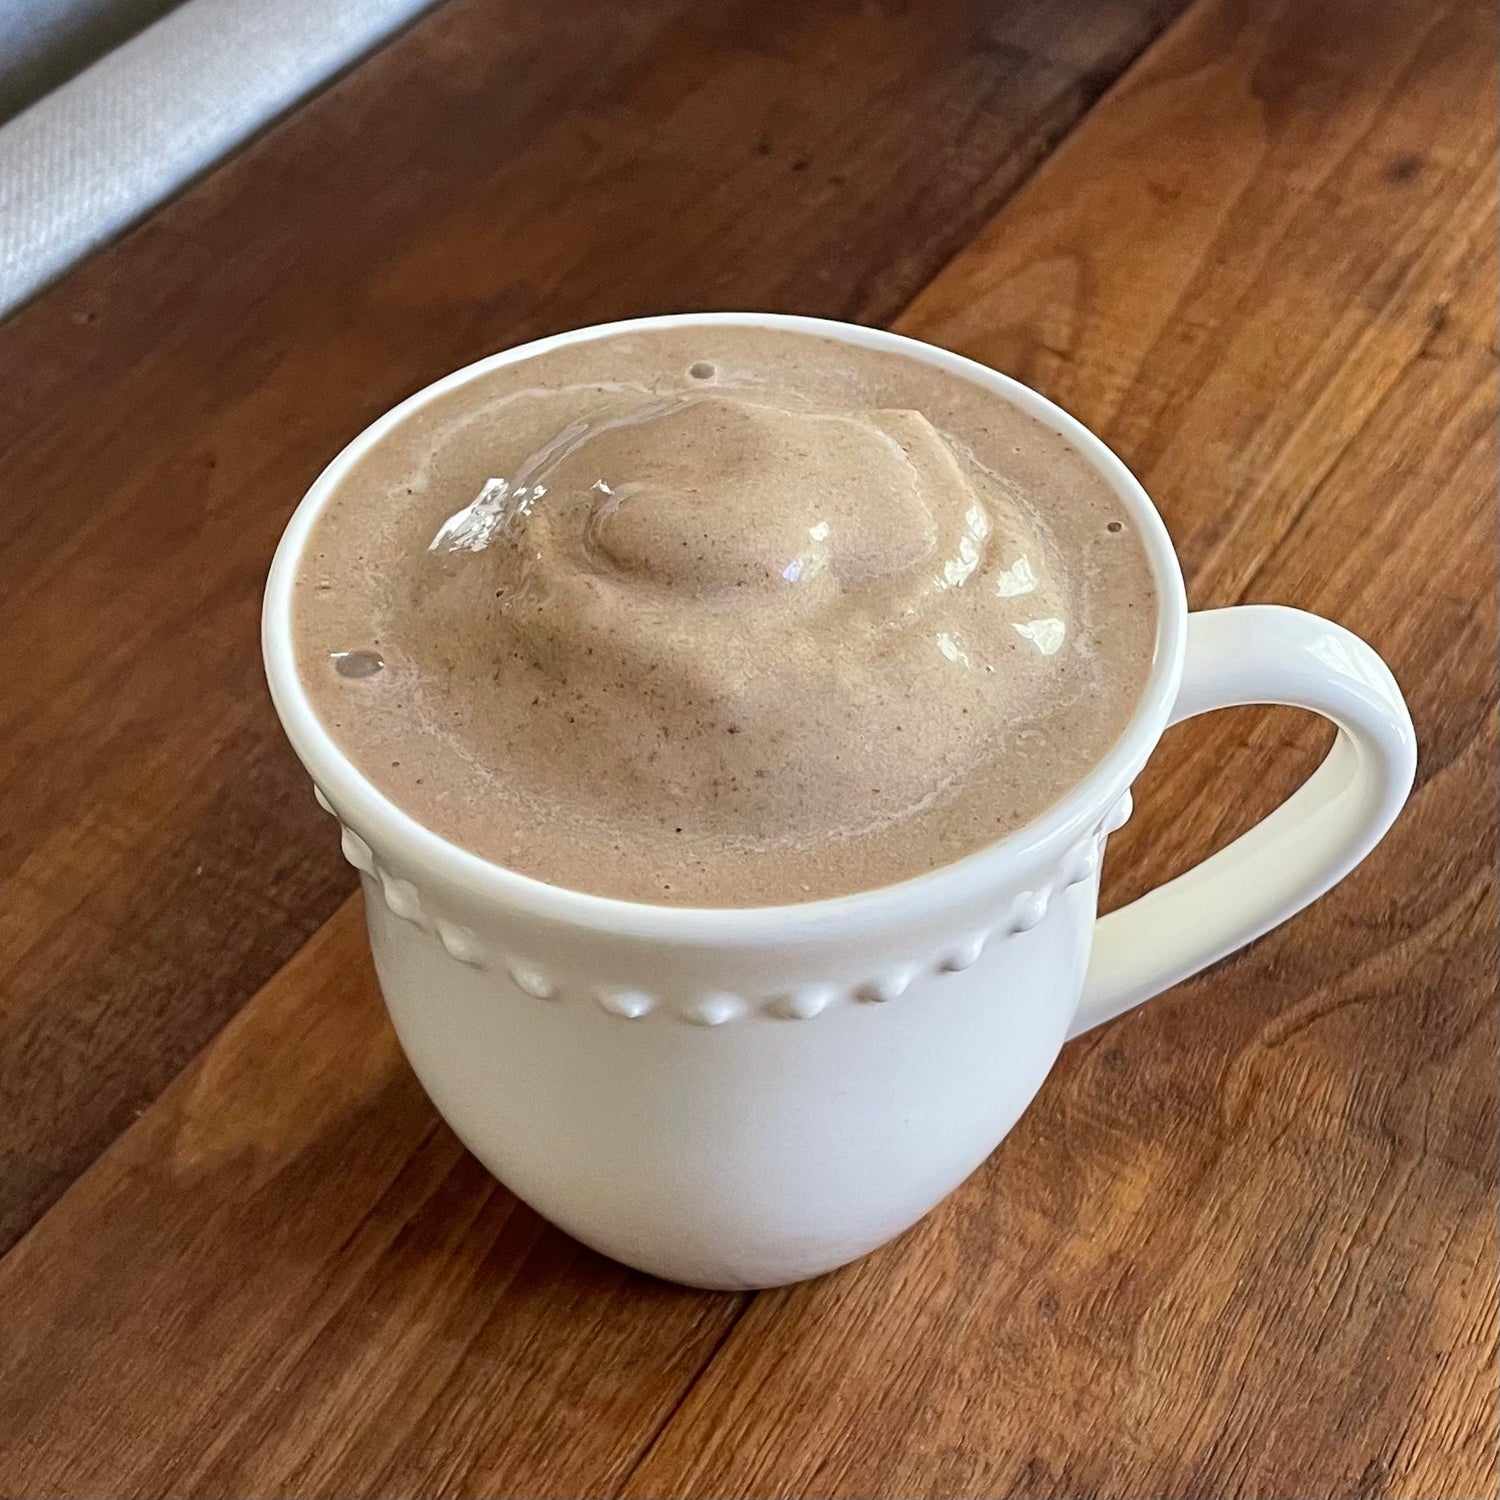 Creamy Coffee Smoothie